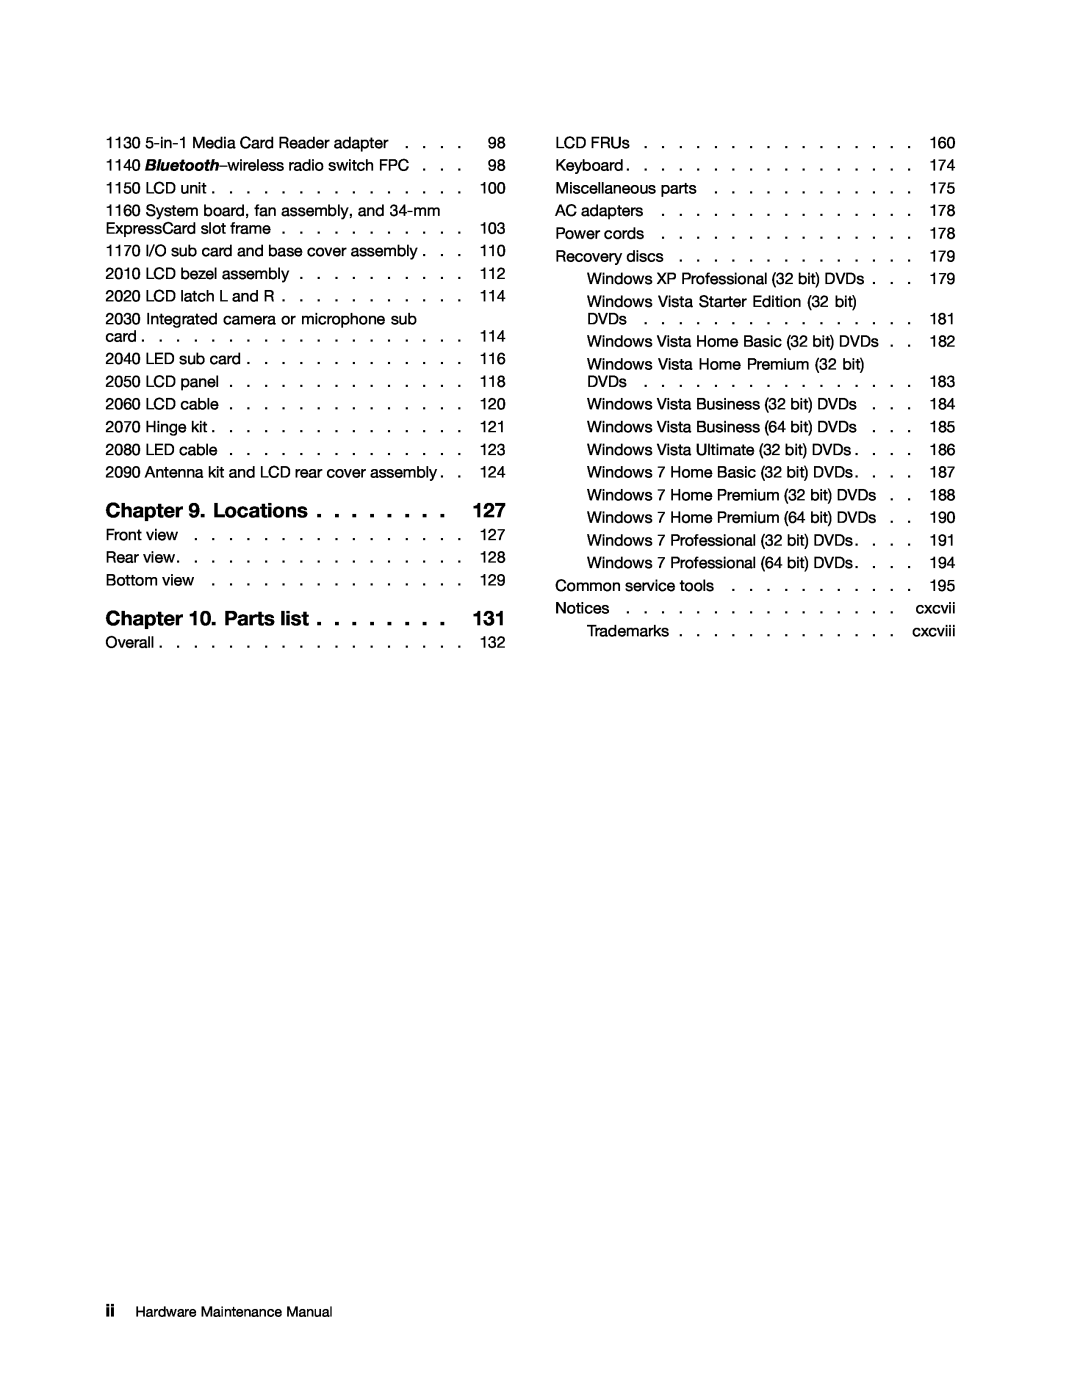 IBM T400S, T410SI manual Locations, Parts list, ii Hardware Maintenance Manual 